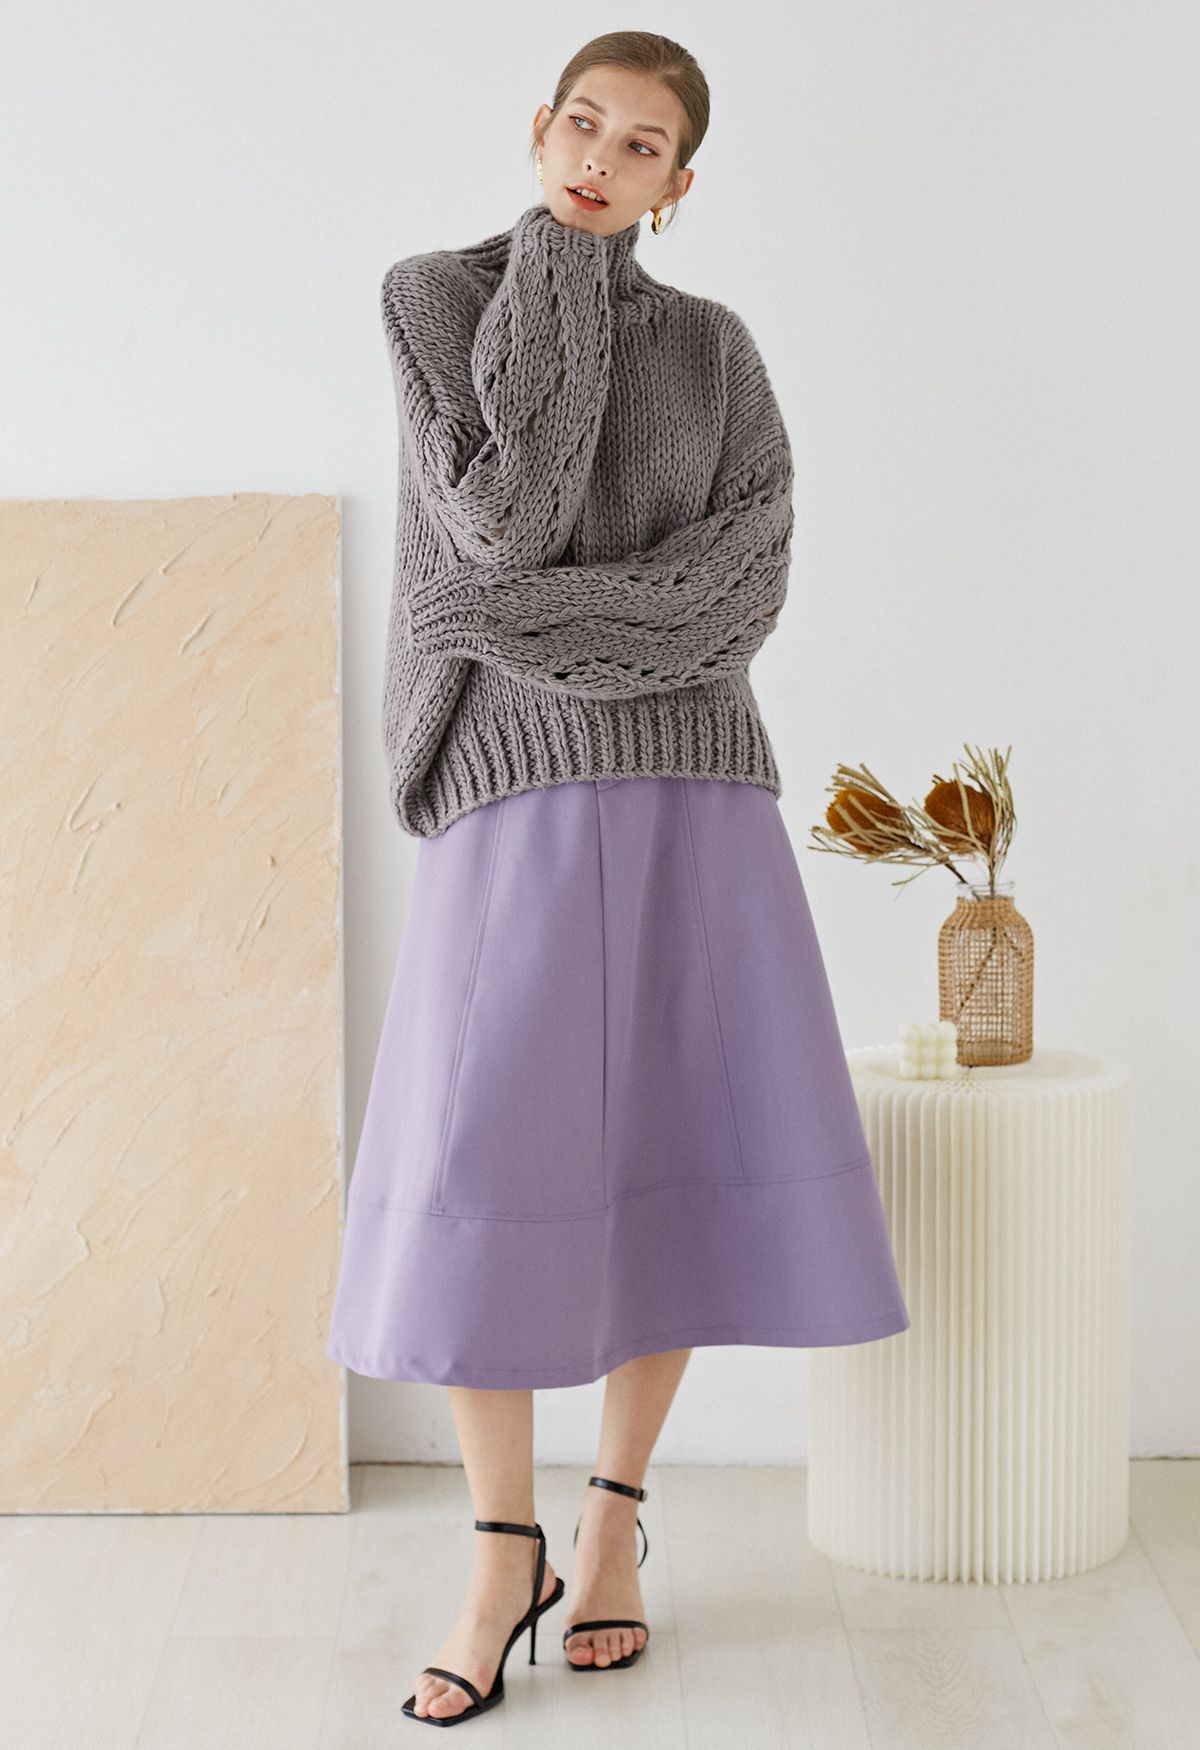 Pointelle Sleeve High Neck Hand-Knit Sweater in Dusty Purple